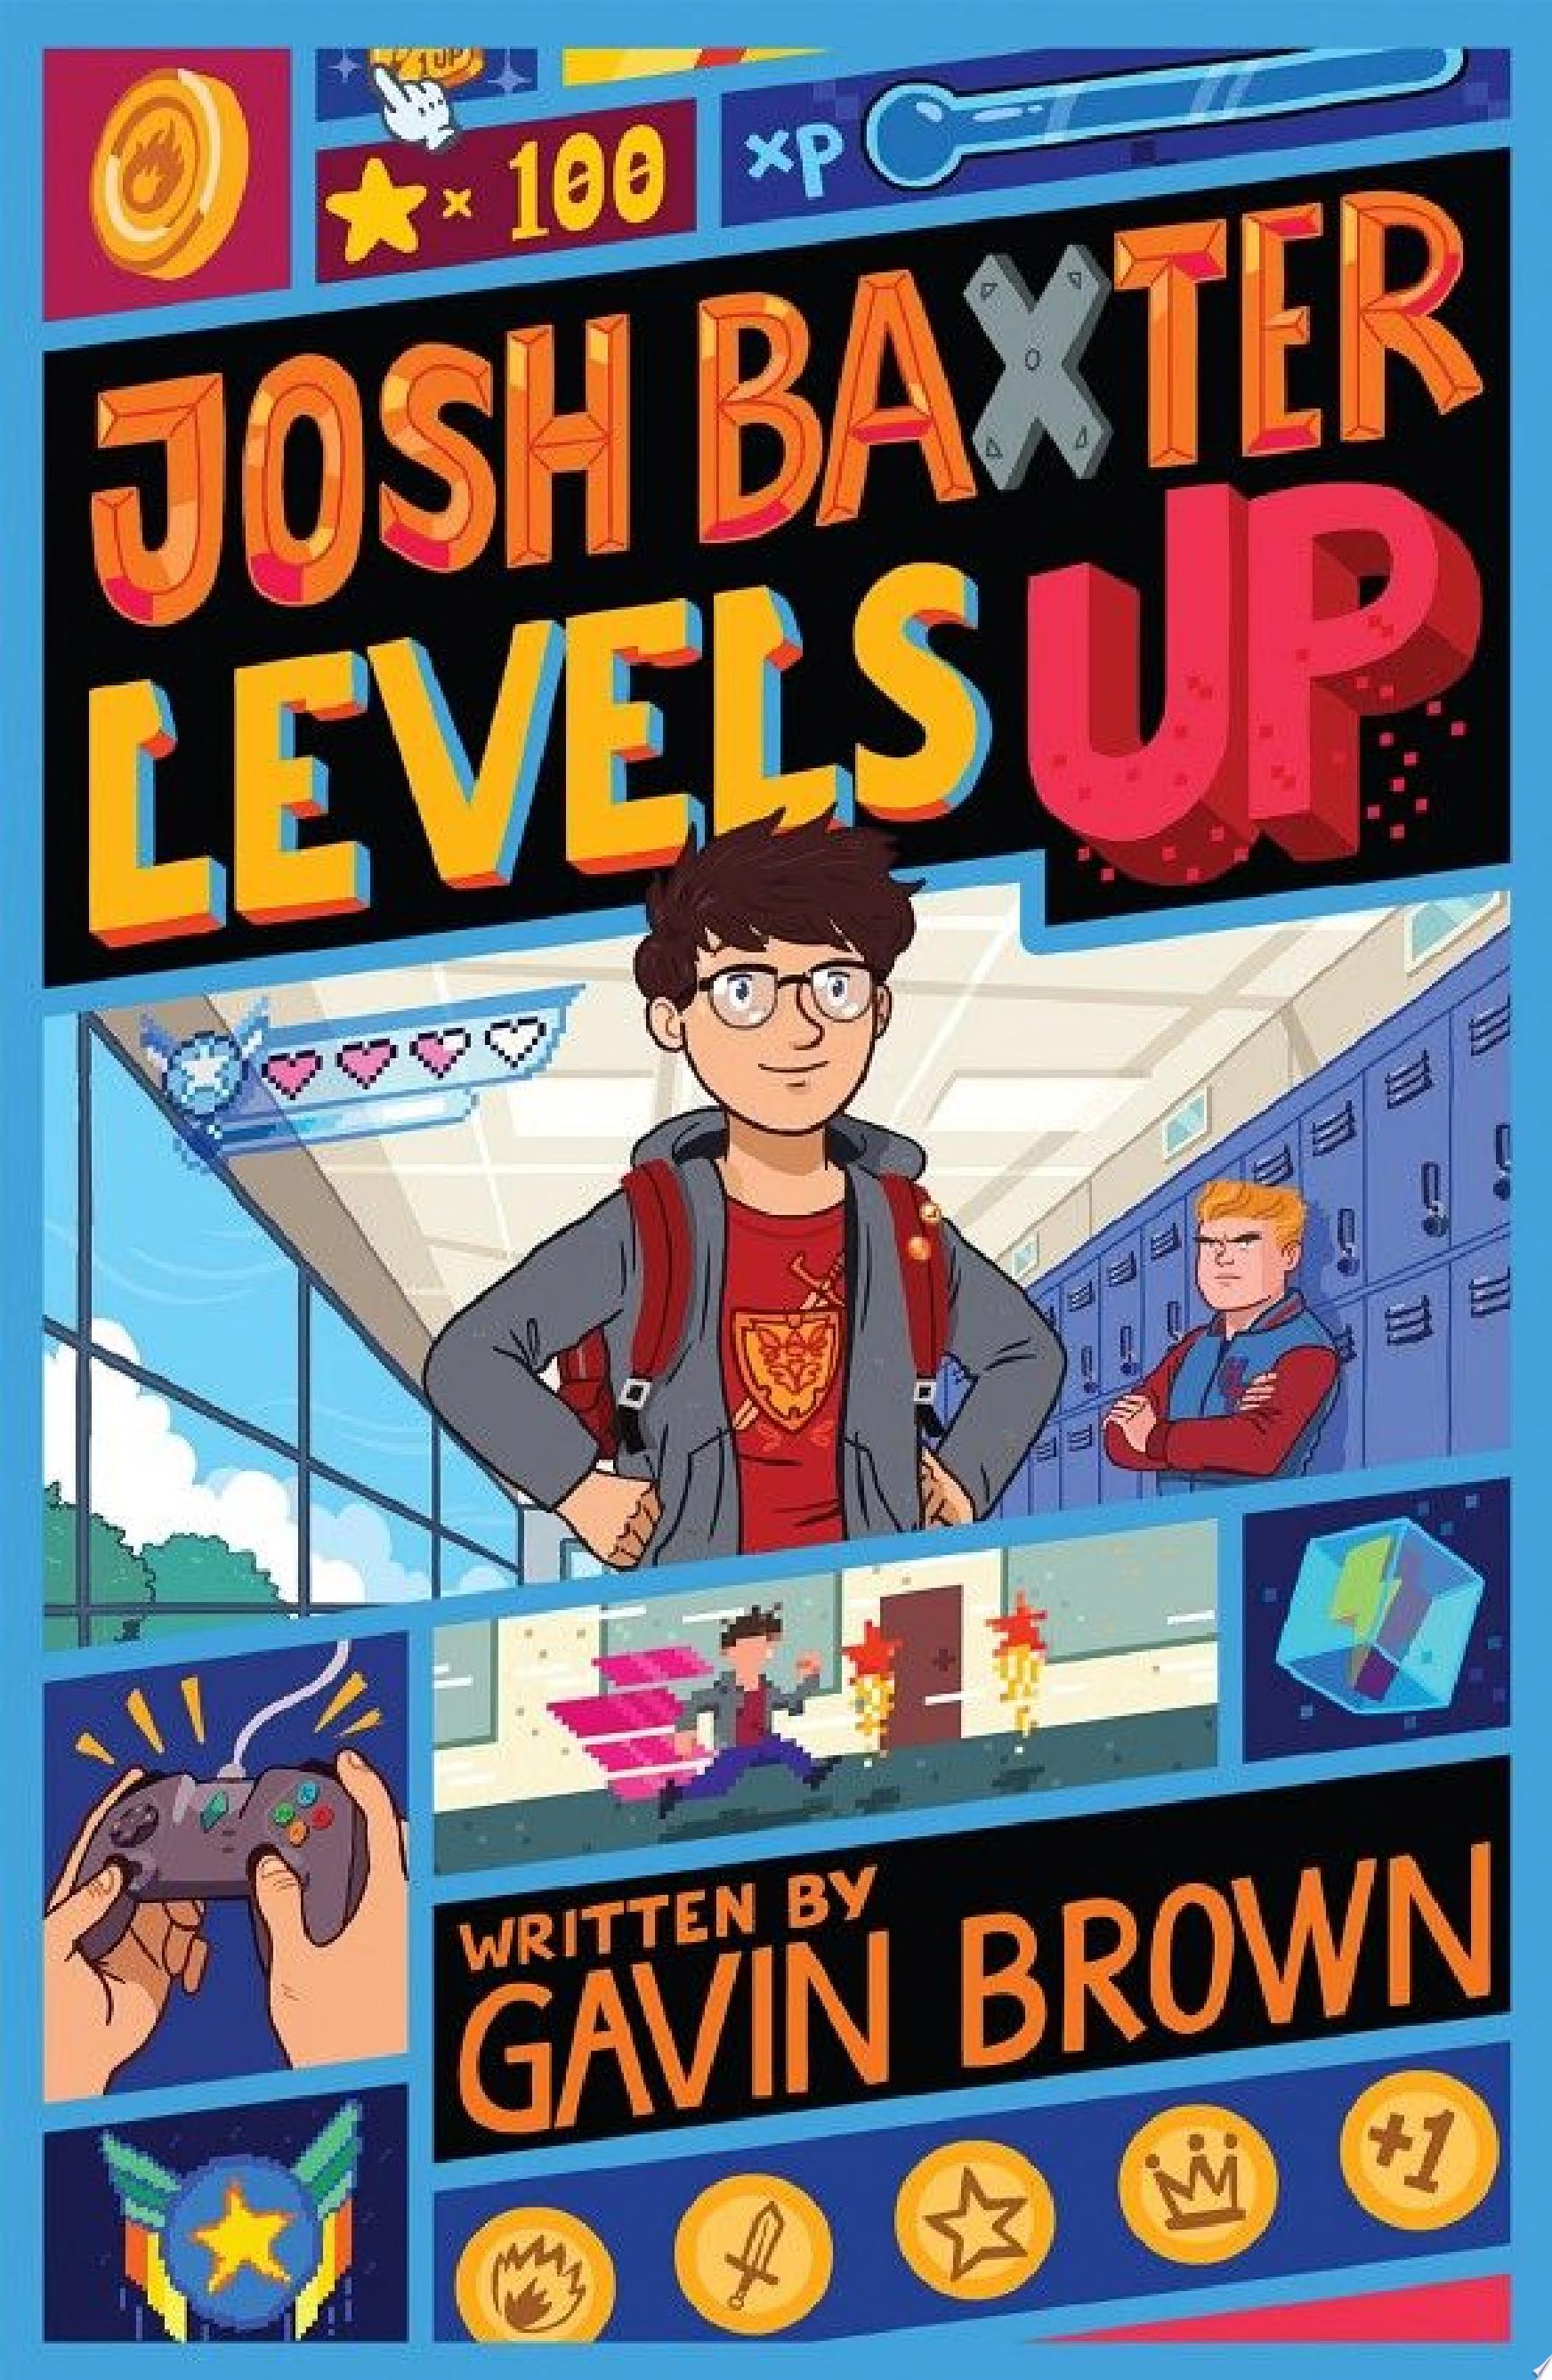 Image for "Josh Baxter Levels Up"